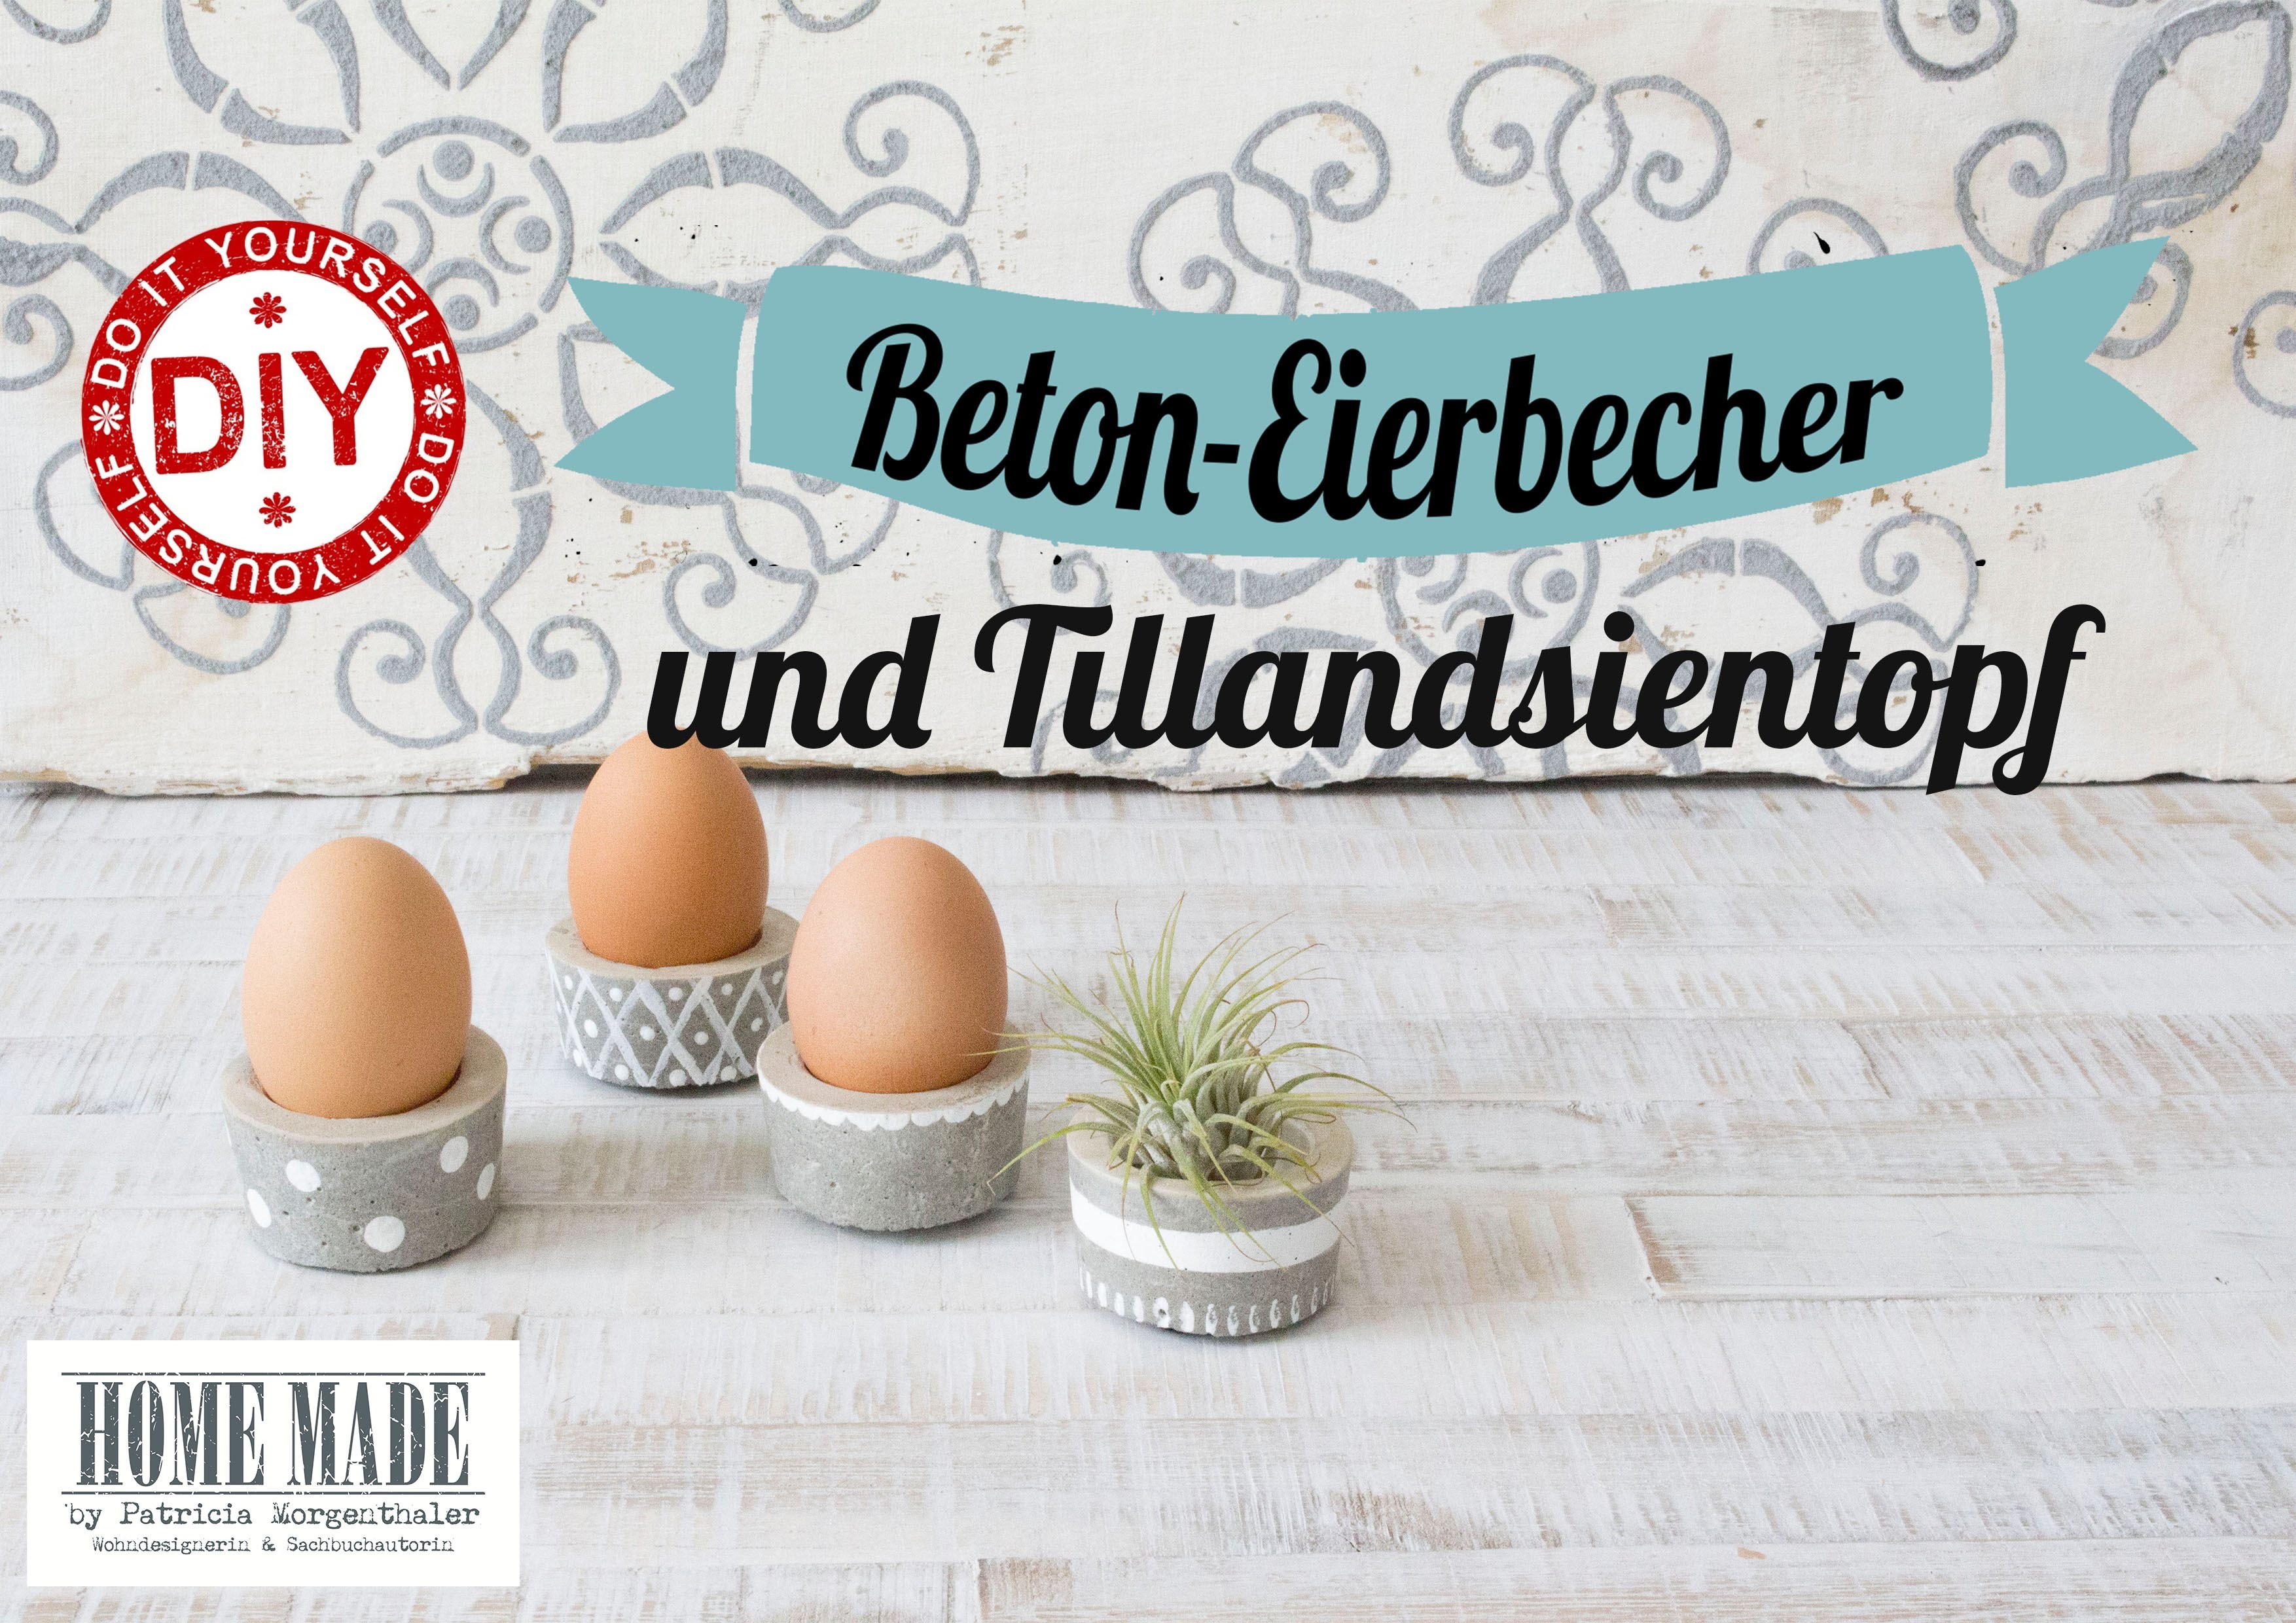 How to: Eierbecher I Tillandsien-Topf aus Beton I Deko Inspirationen selbstgemacht